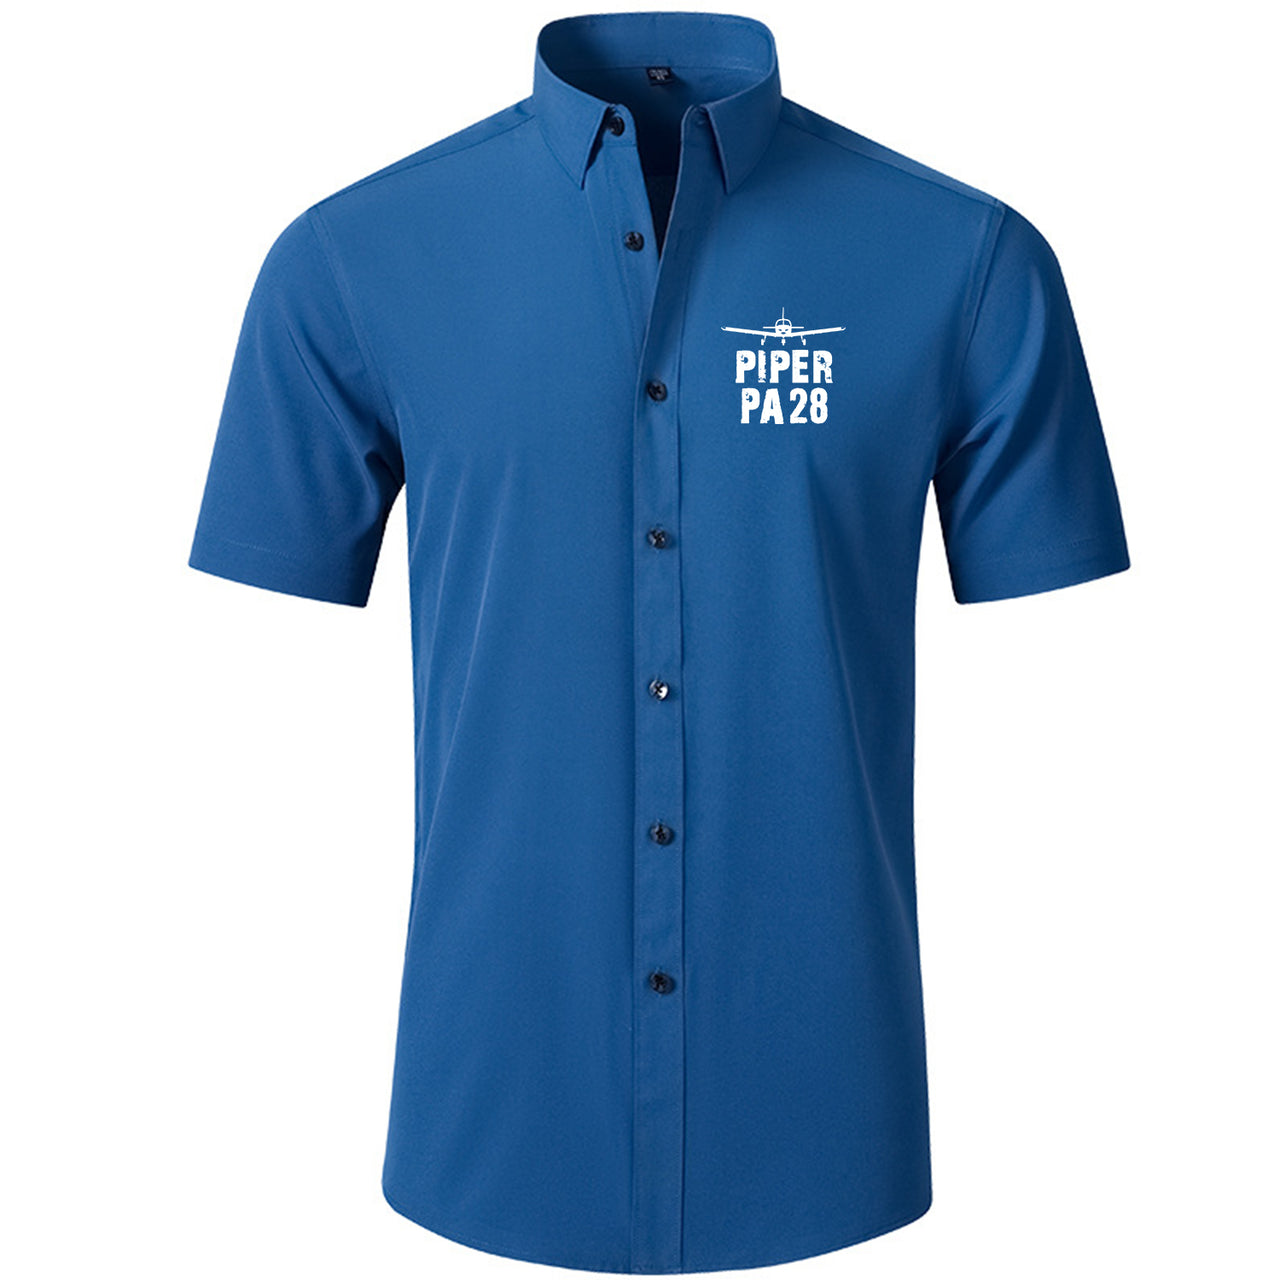 Piper PA28 & Plane Designed Short Sleeve Shirts